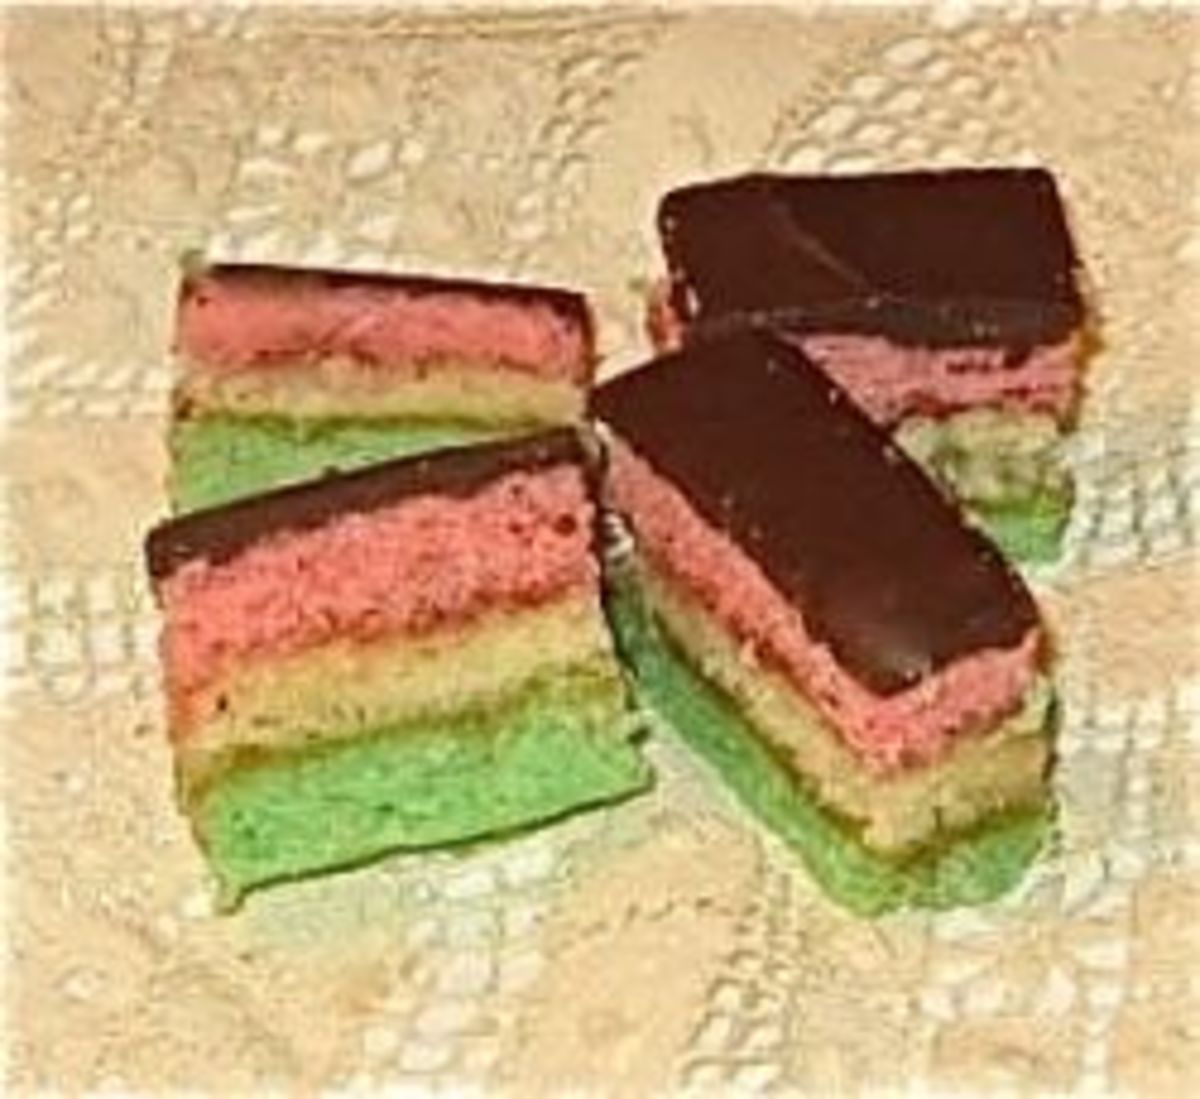 Italian Rainbow Cookies Recipe